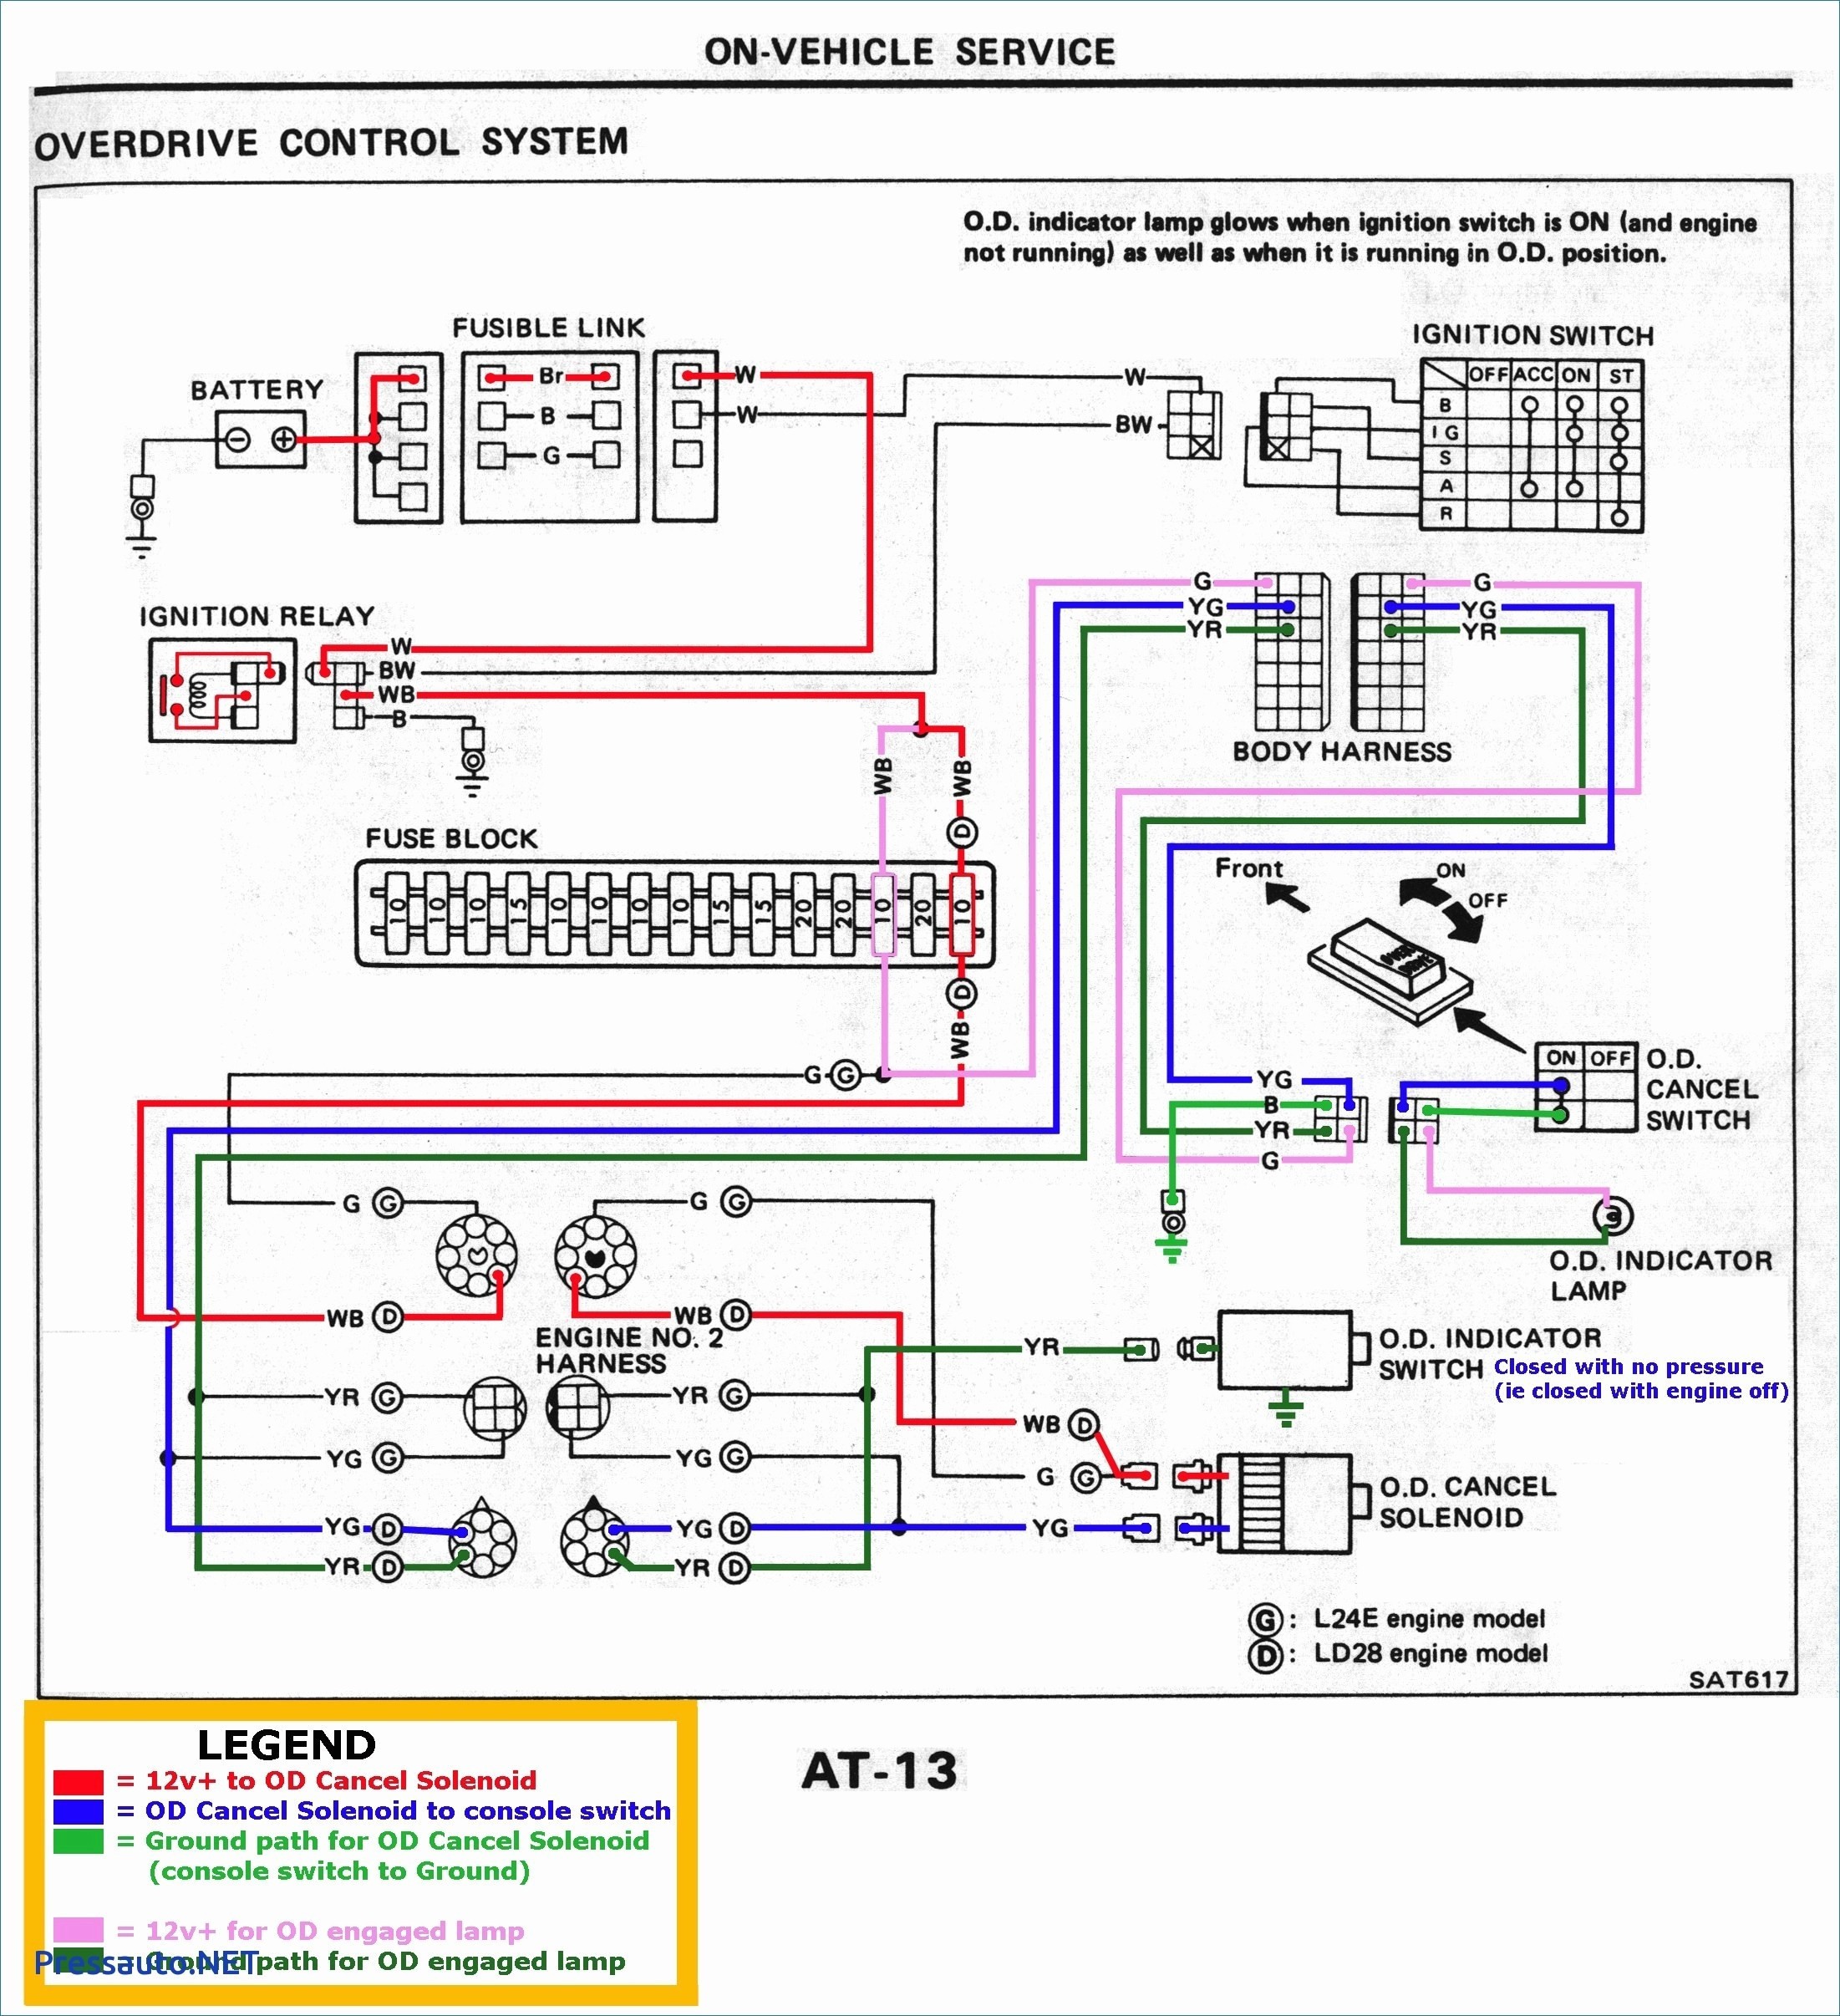 Watt Stopper Power Pack Wiring Diagram Electrical Circuit Wiring Diagram Xbox 360 Power Supply Best Wiring Diagram Xbox 360